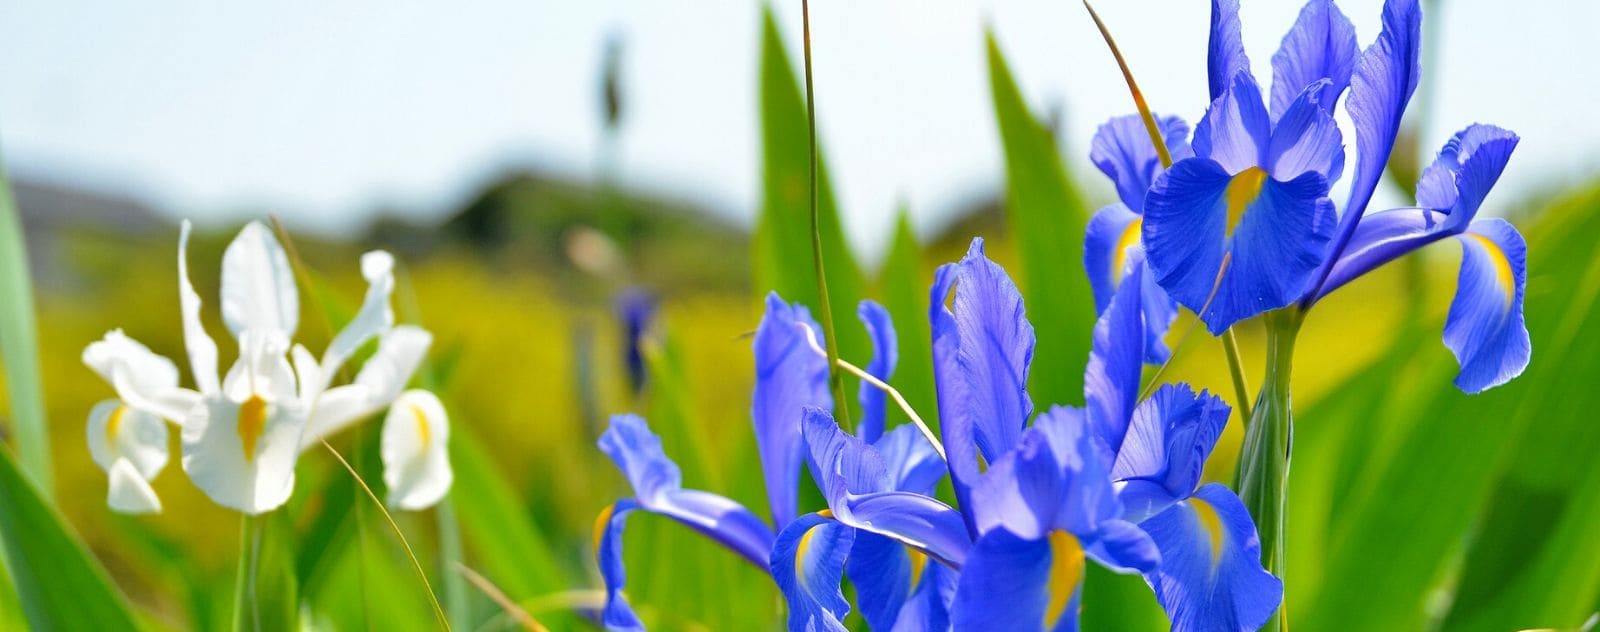 Iris Japanese flower blue white field